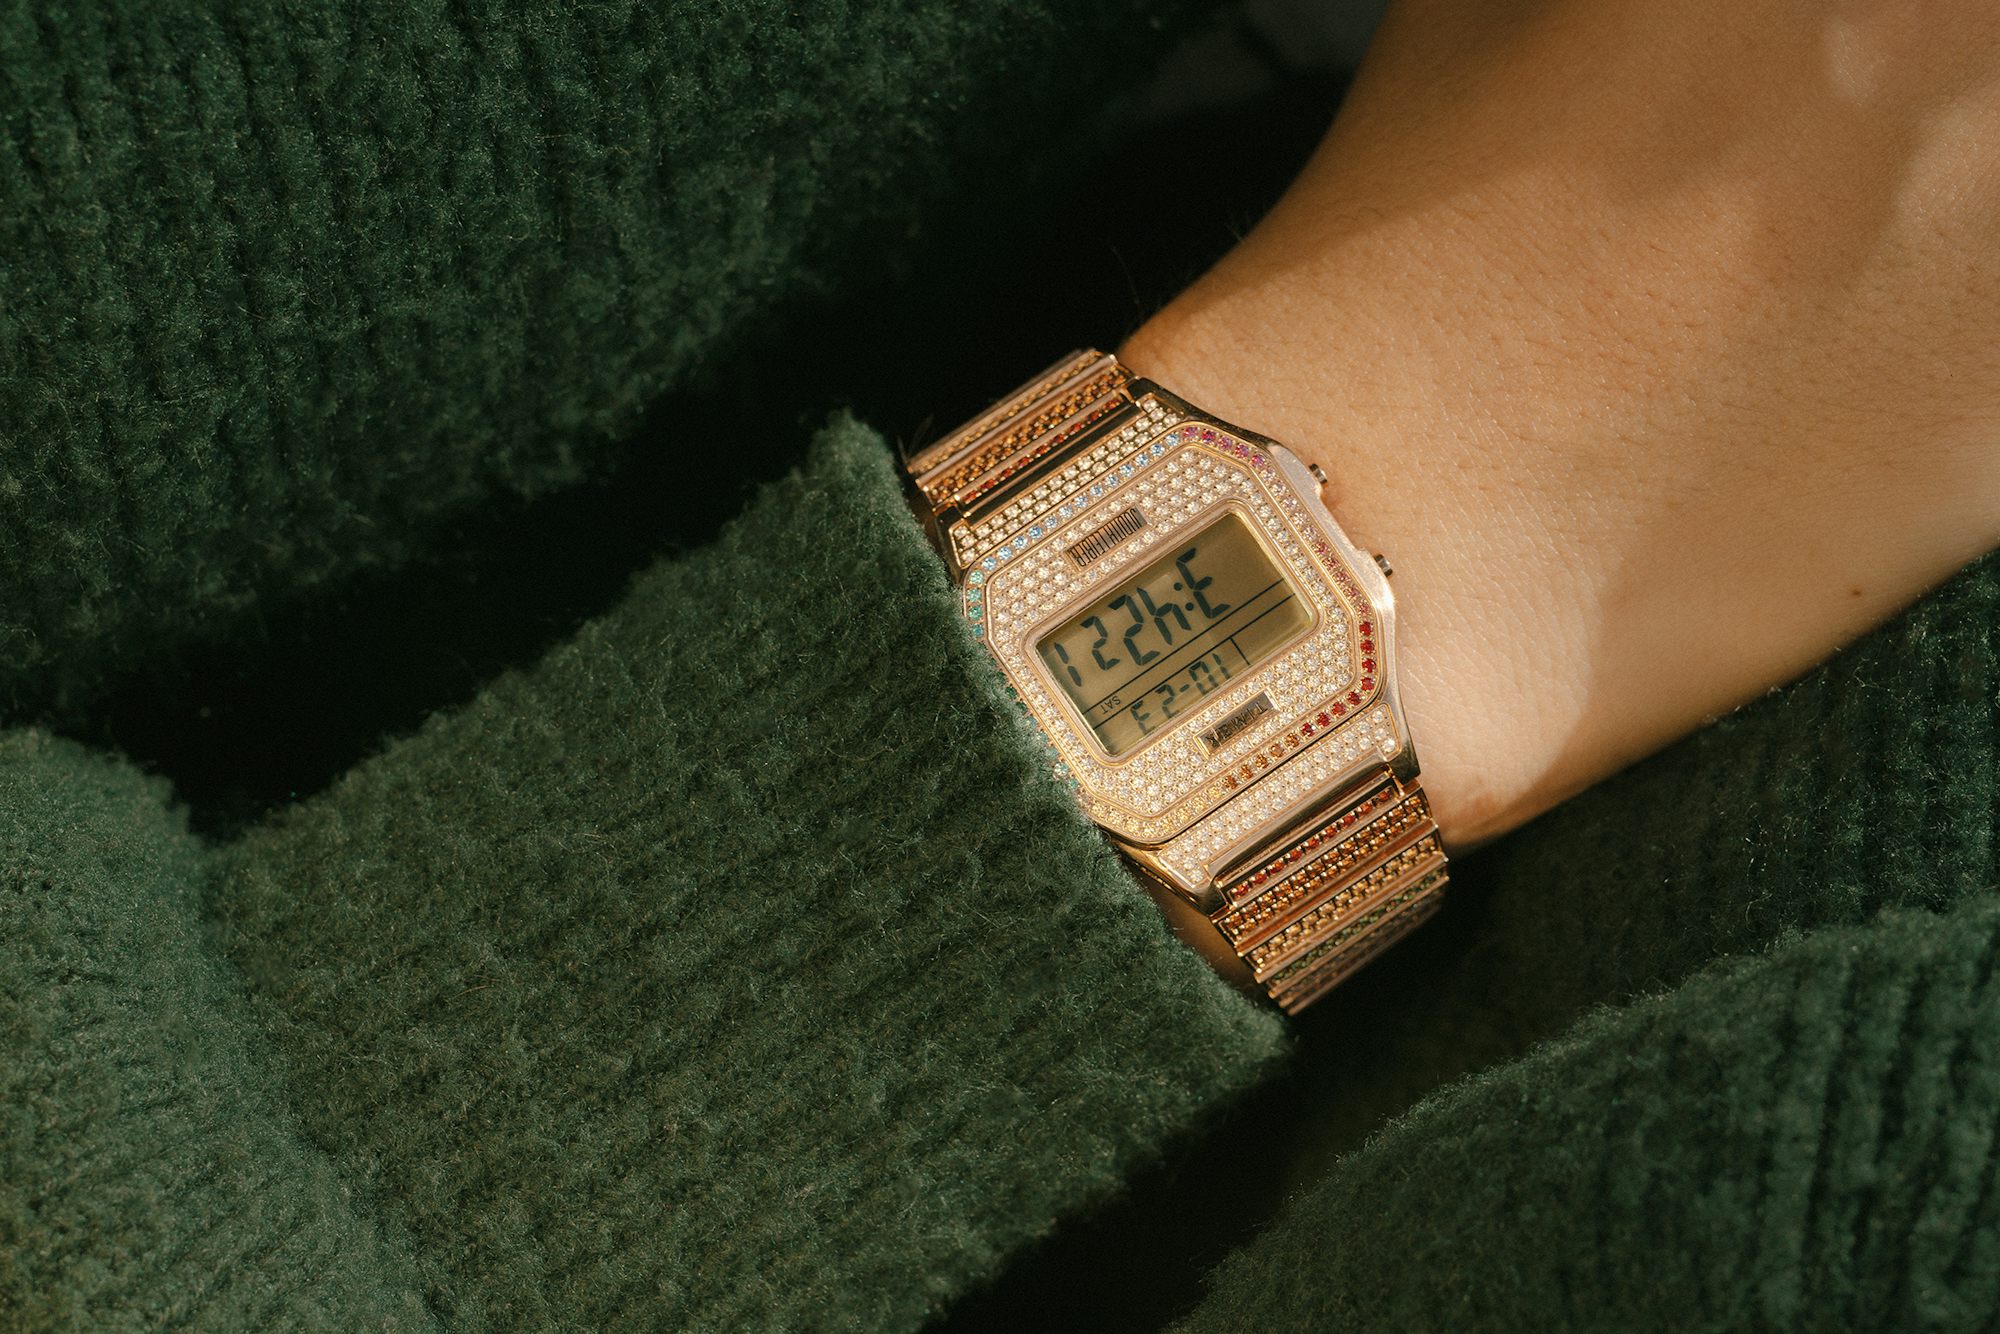 A Timex watch on a wrist 